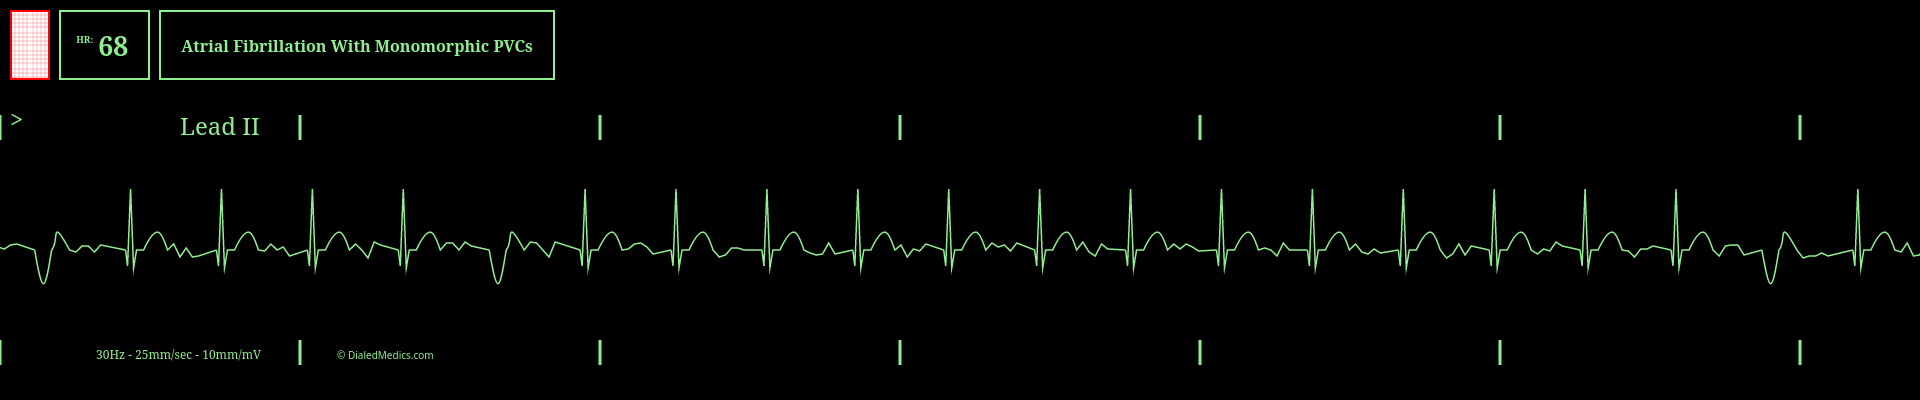 Unifocal ectopy (monomorphic PVC's) example EKG monitor capture.